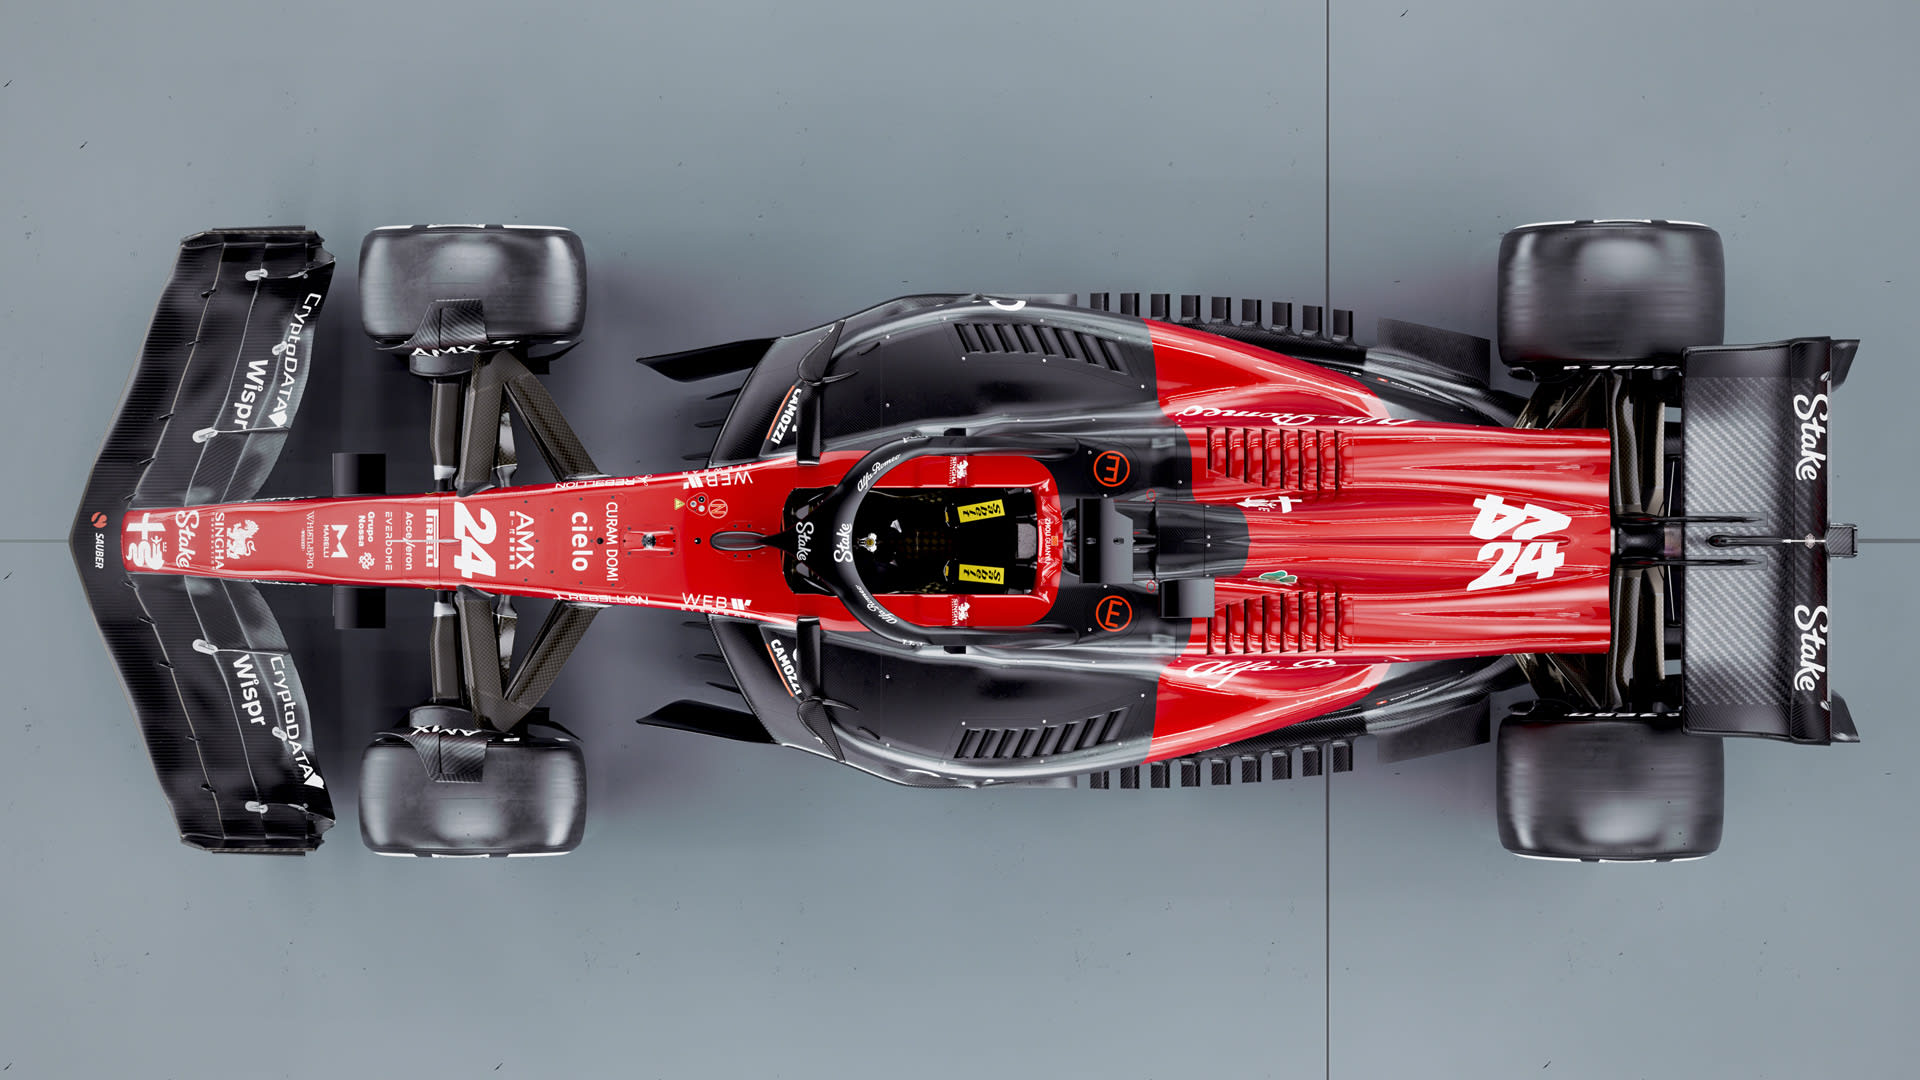 F1 22 Adds Alfa Romeo F1 Team 2023 C43 Car, Play List on March 2